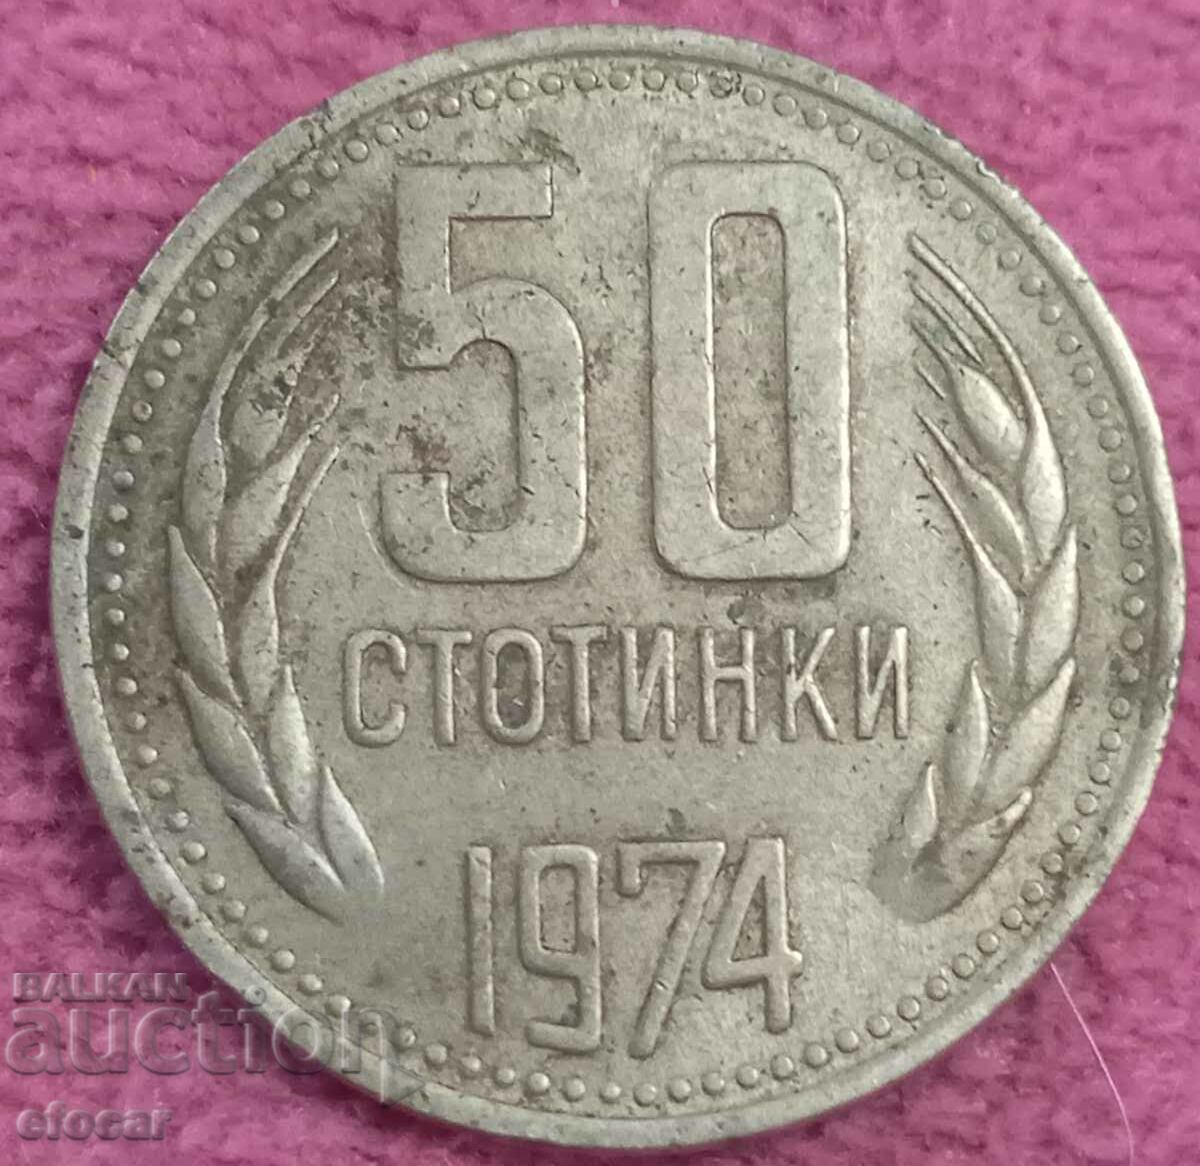 50 cents Bulgaria 1974